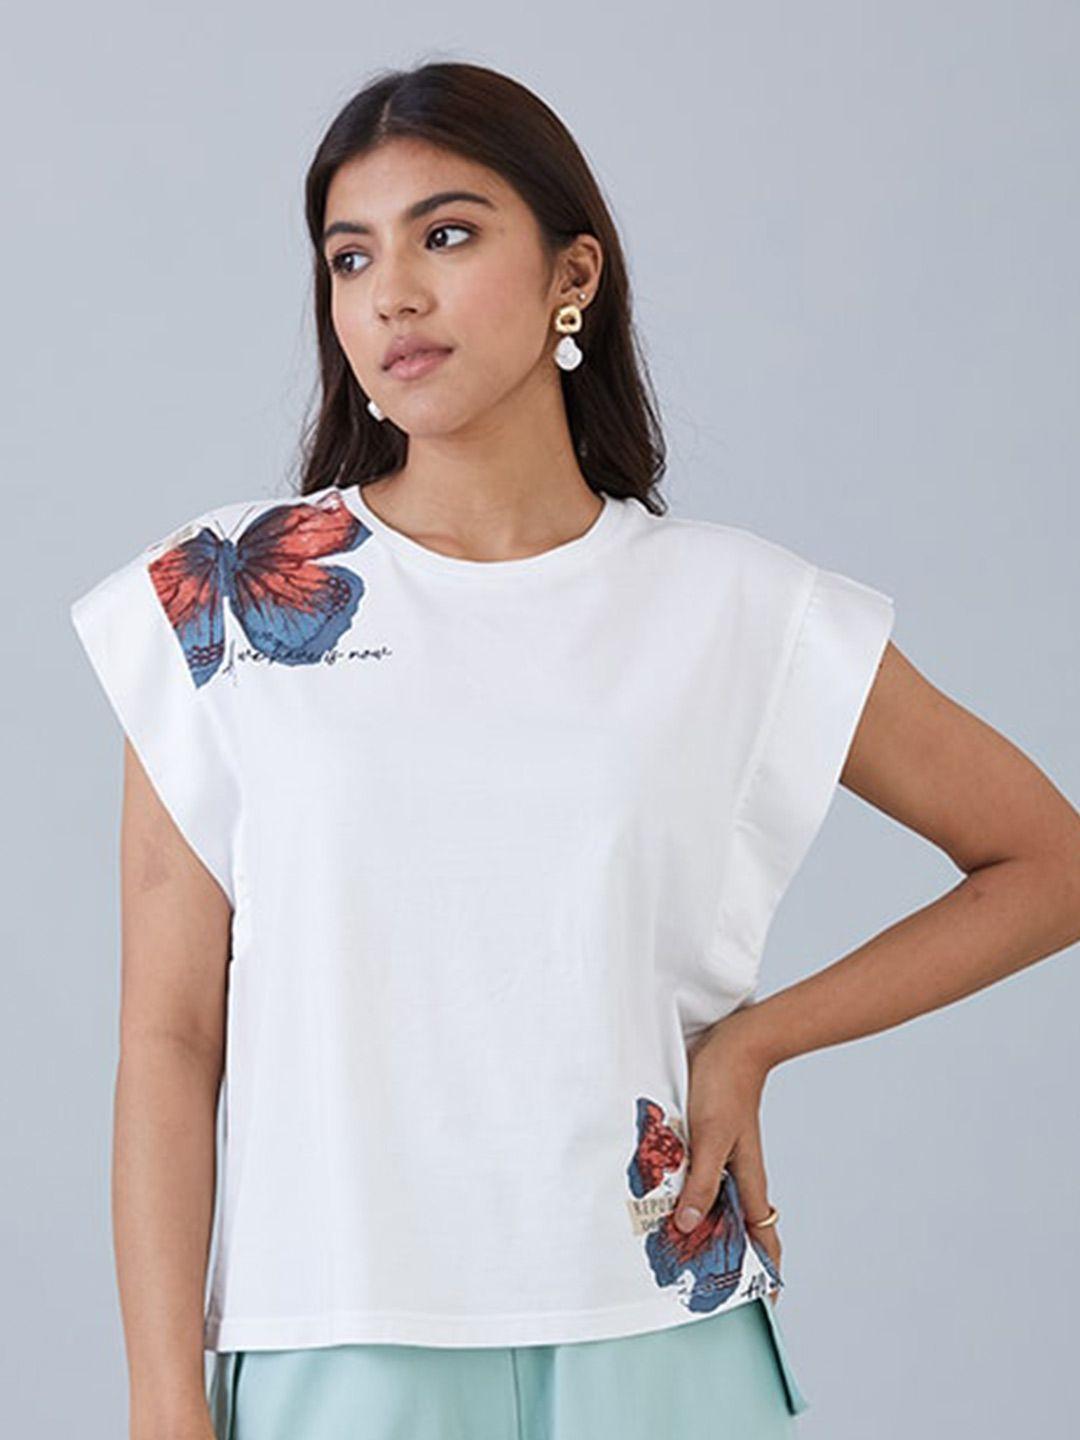 muvazo conversational printed extended sleeves wings top